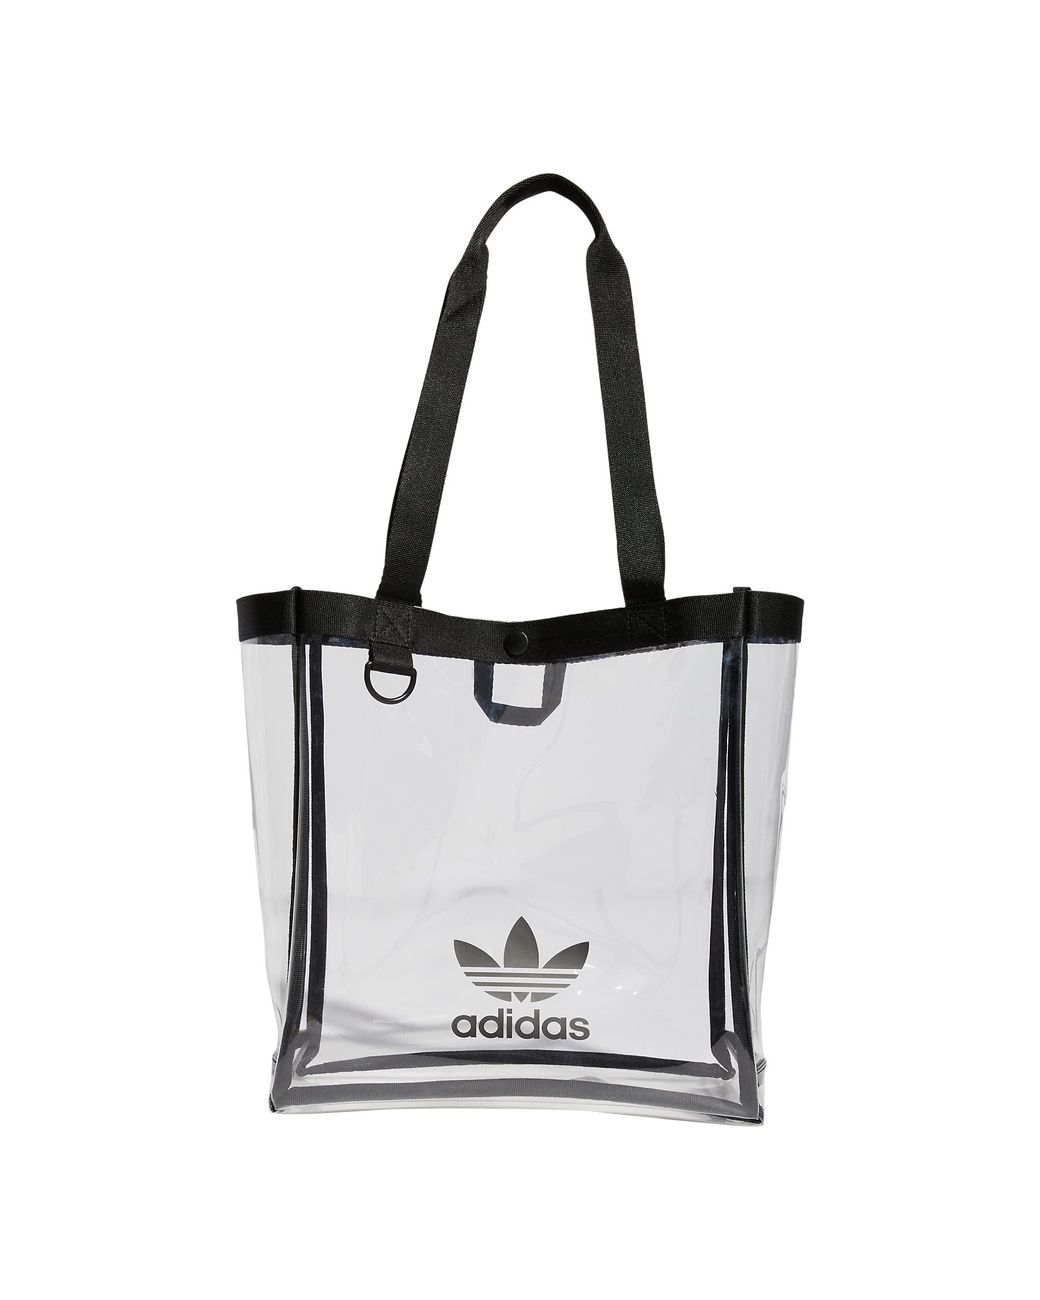 adidas Originals Tote bag - non-dyed/black/off-white - Zalando.de